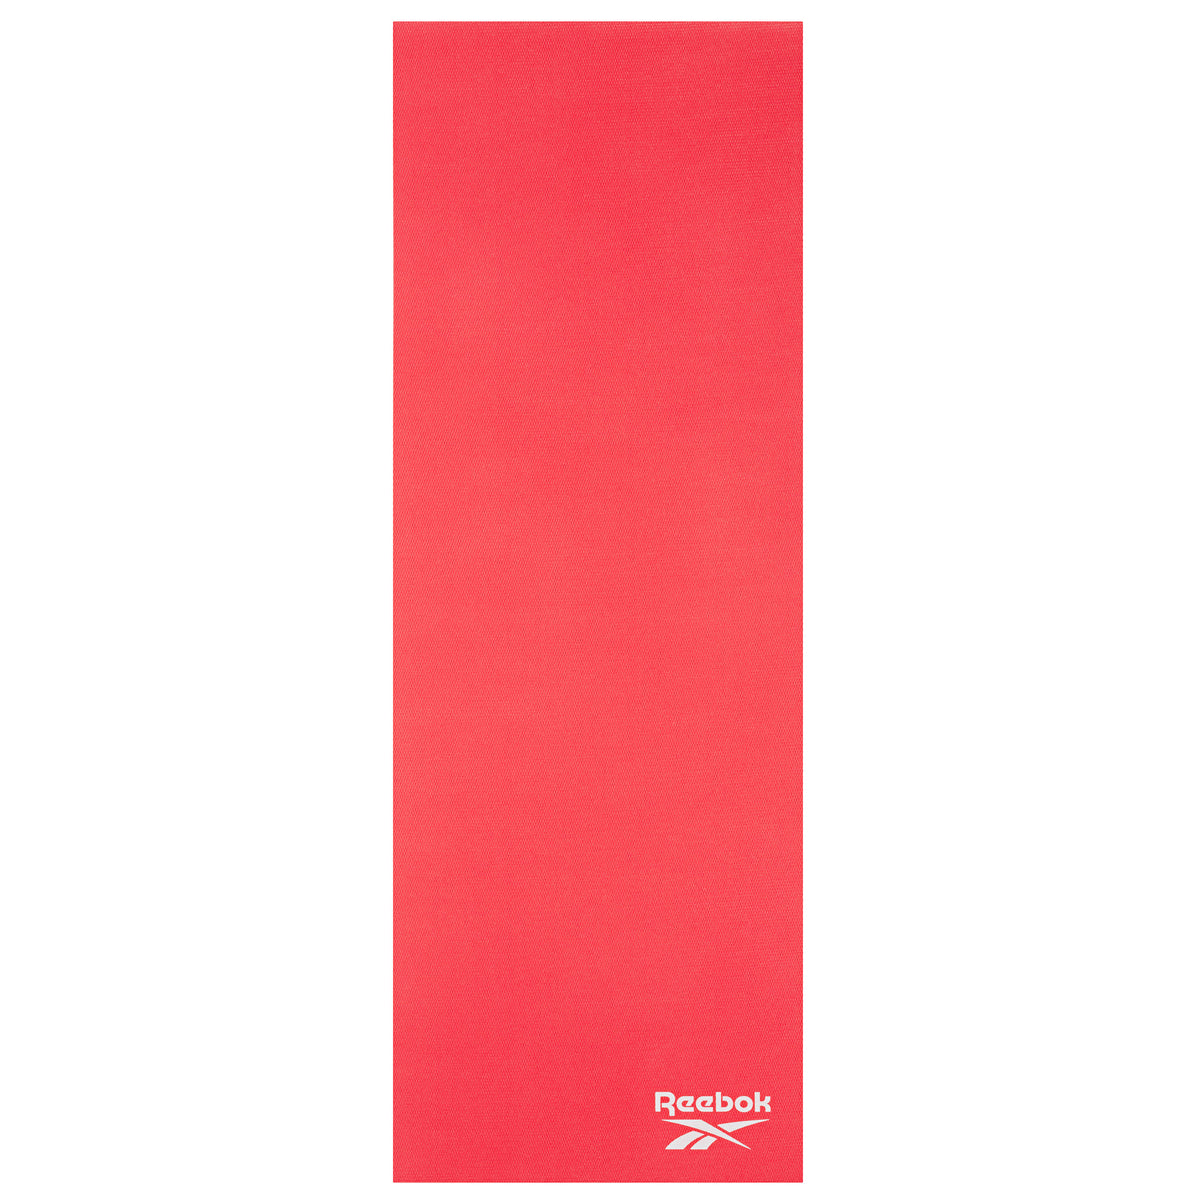 Reebok Solid Yoga Mat (5mm) Cherry flat